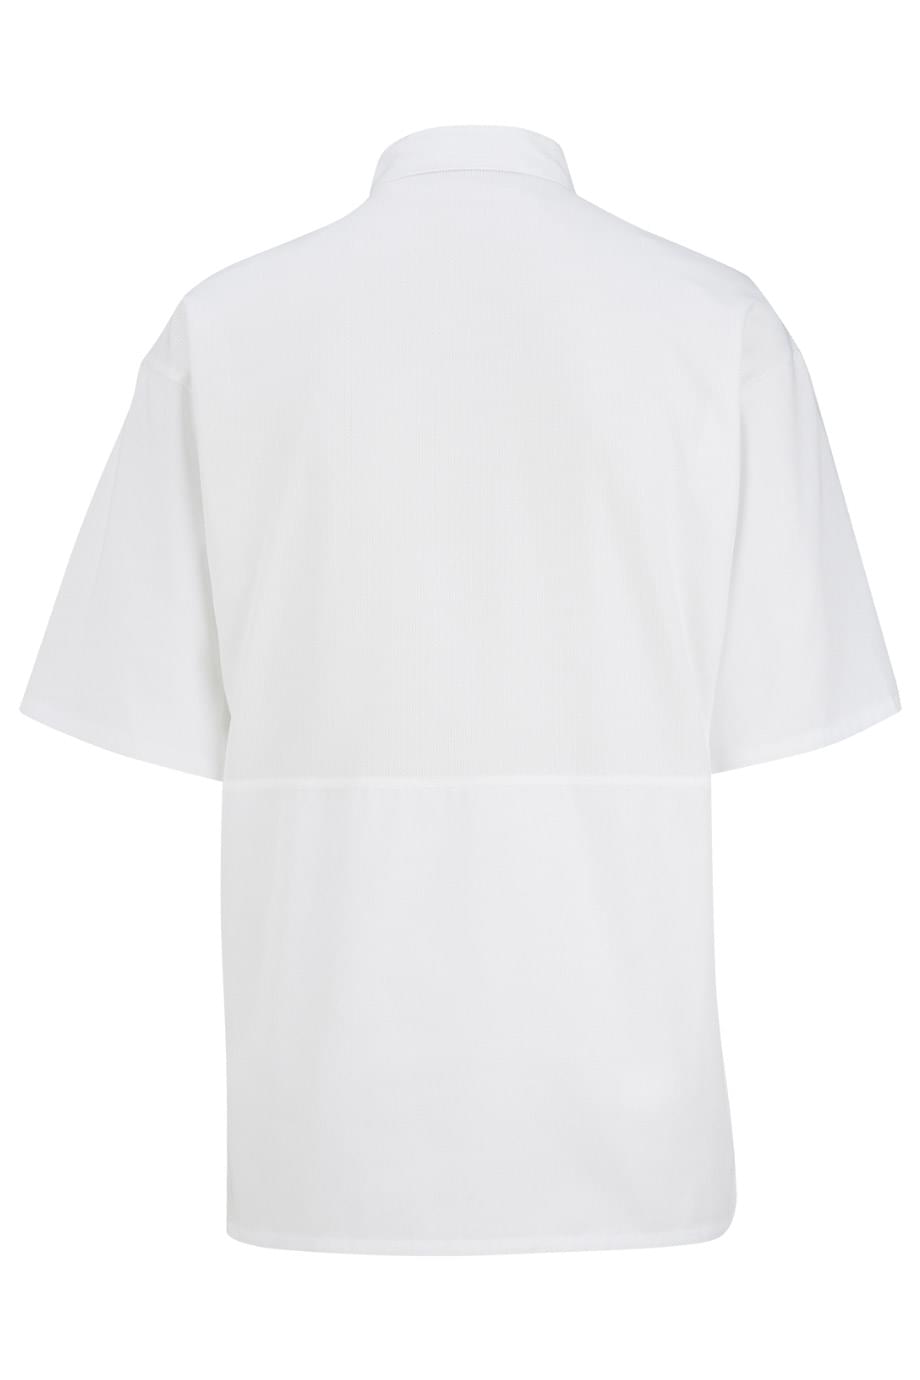 MESH BACK CHEF COAT - 12-CLOTH BUTTONS | Edwards Garment